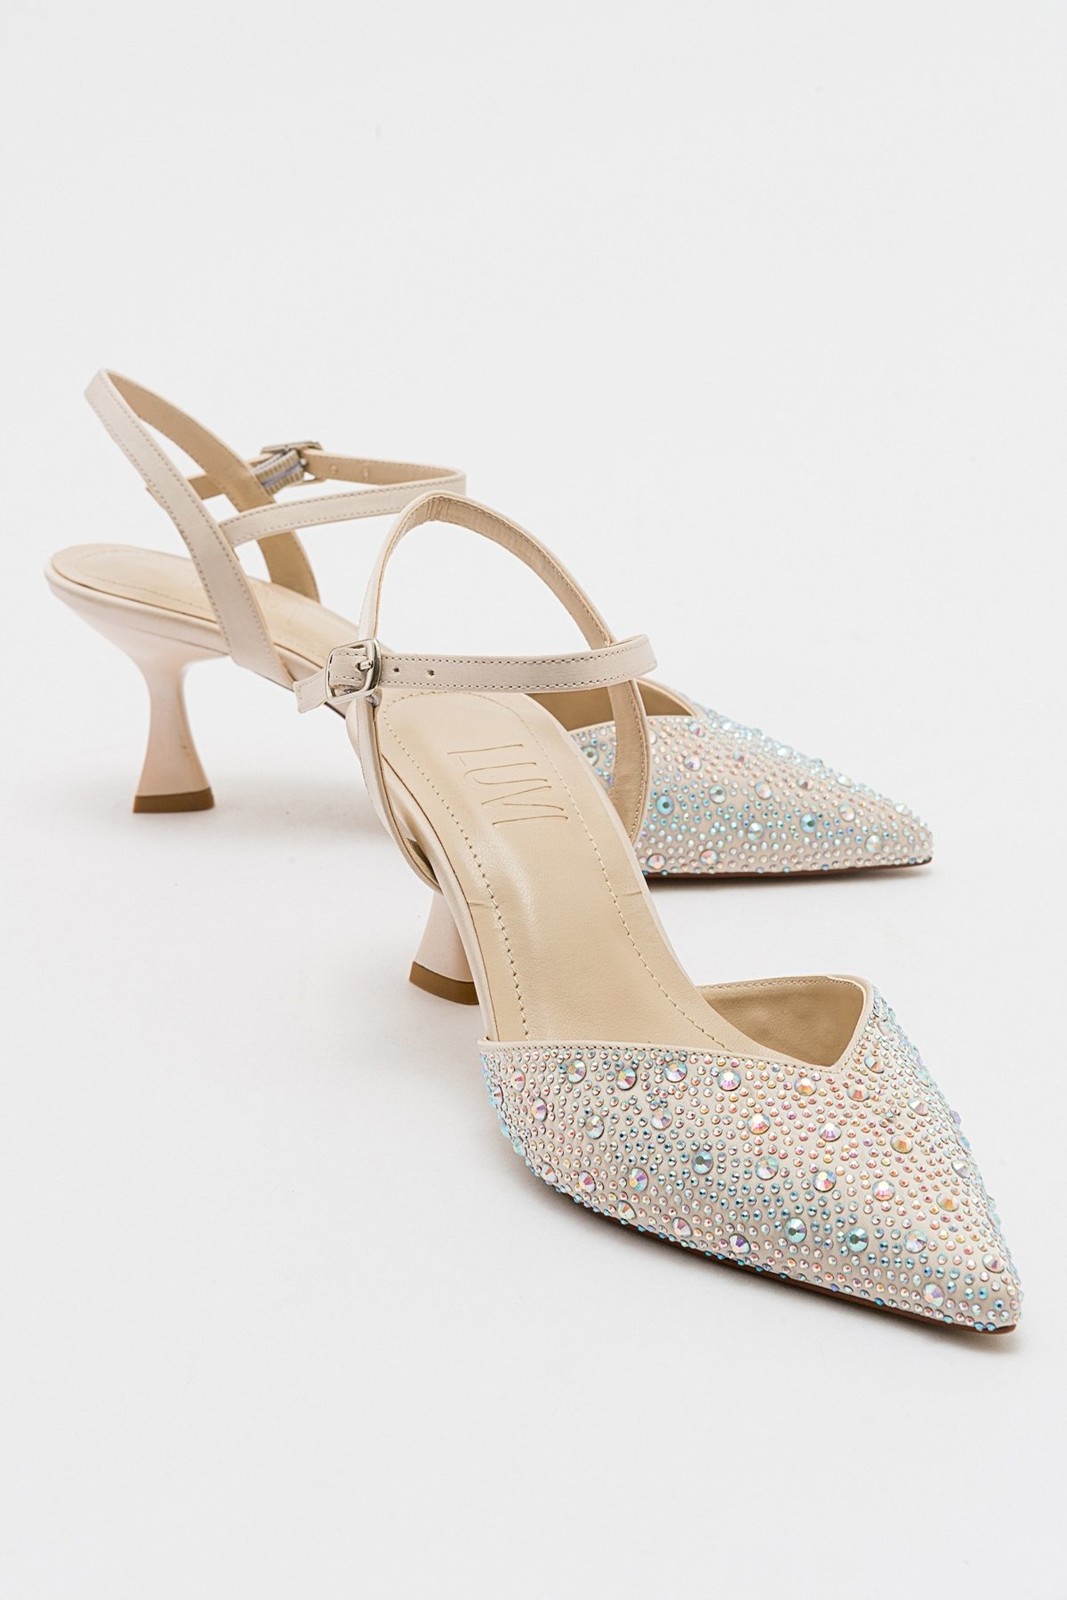 LuviShoes VİLKA Ecru Women's Satin Stone Pointed Toe Thin Heeled Evening Shoes